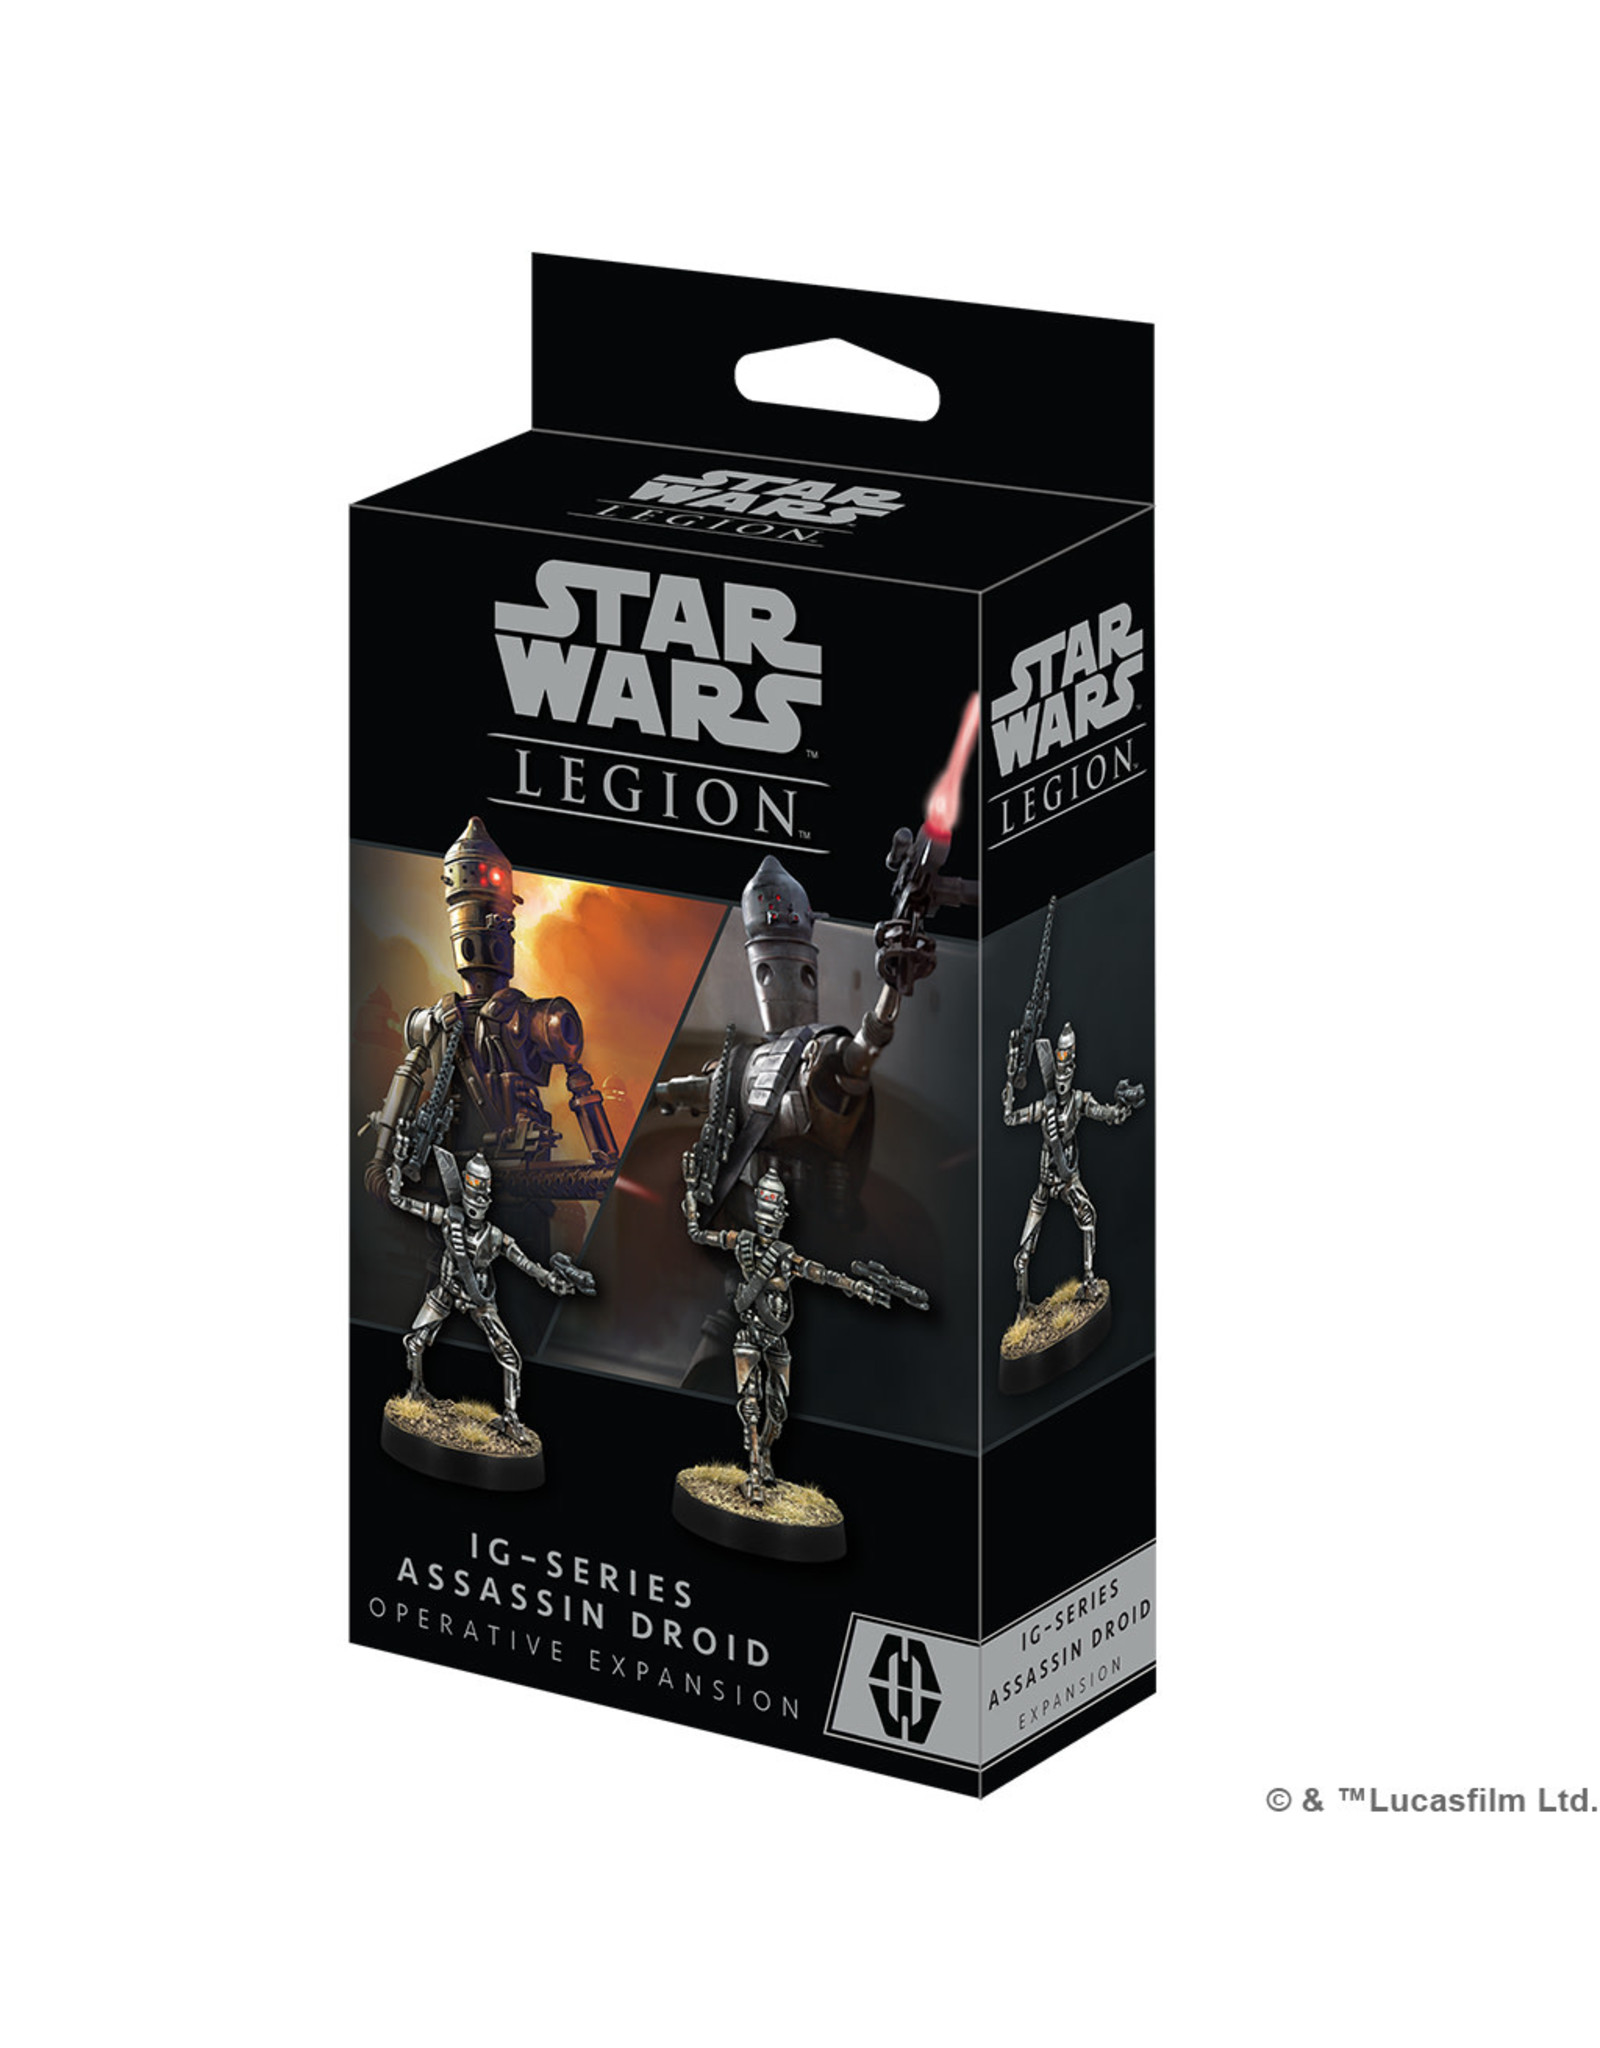 STAR WARS LEGION Star Wars Legion  IG-Series Assassin Droids Operative Expansion